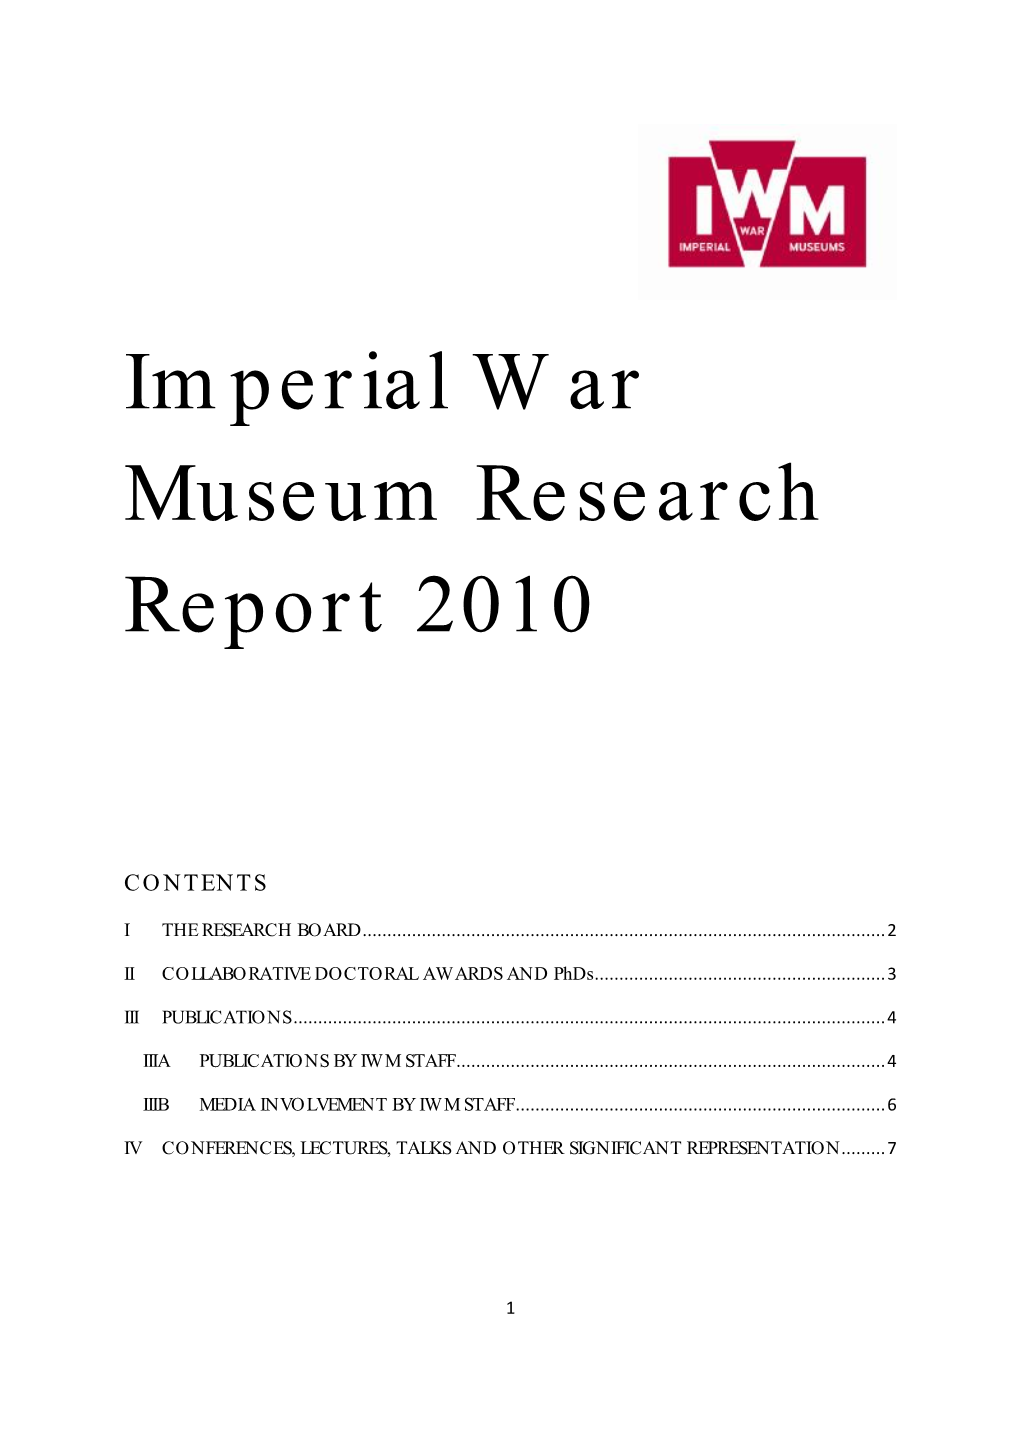 Imperial War Museum Research Report 2010